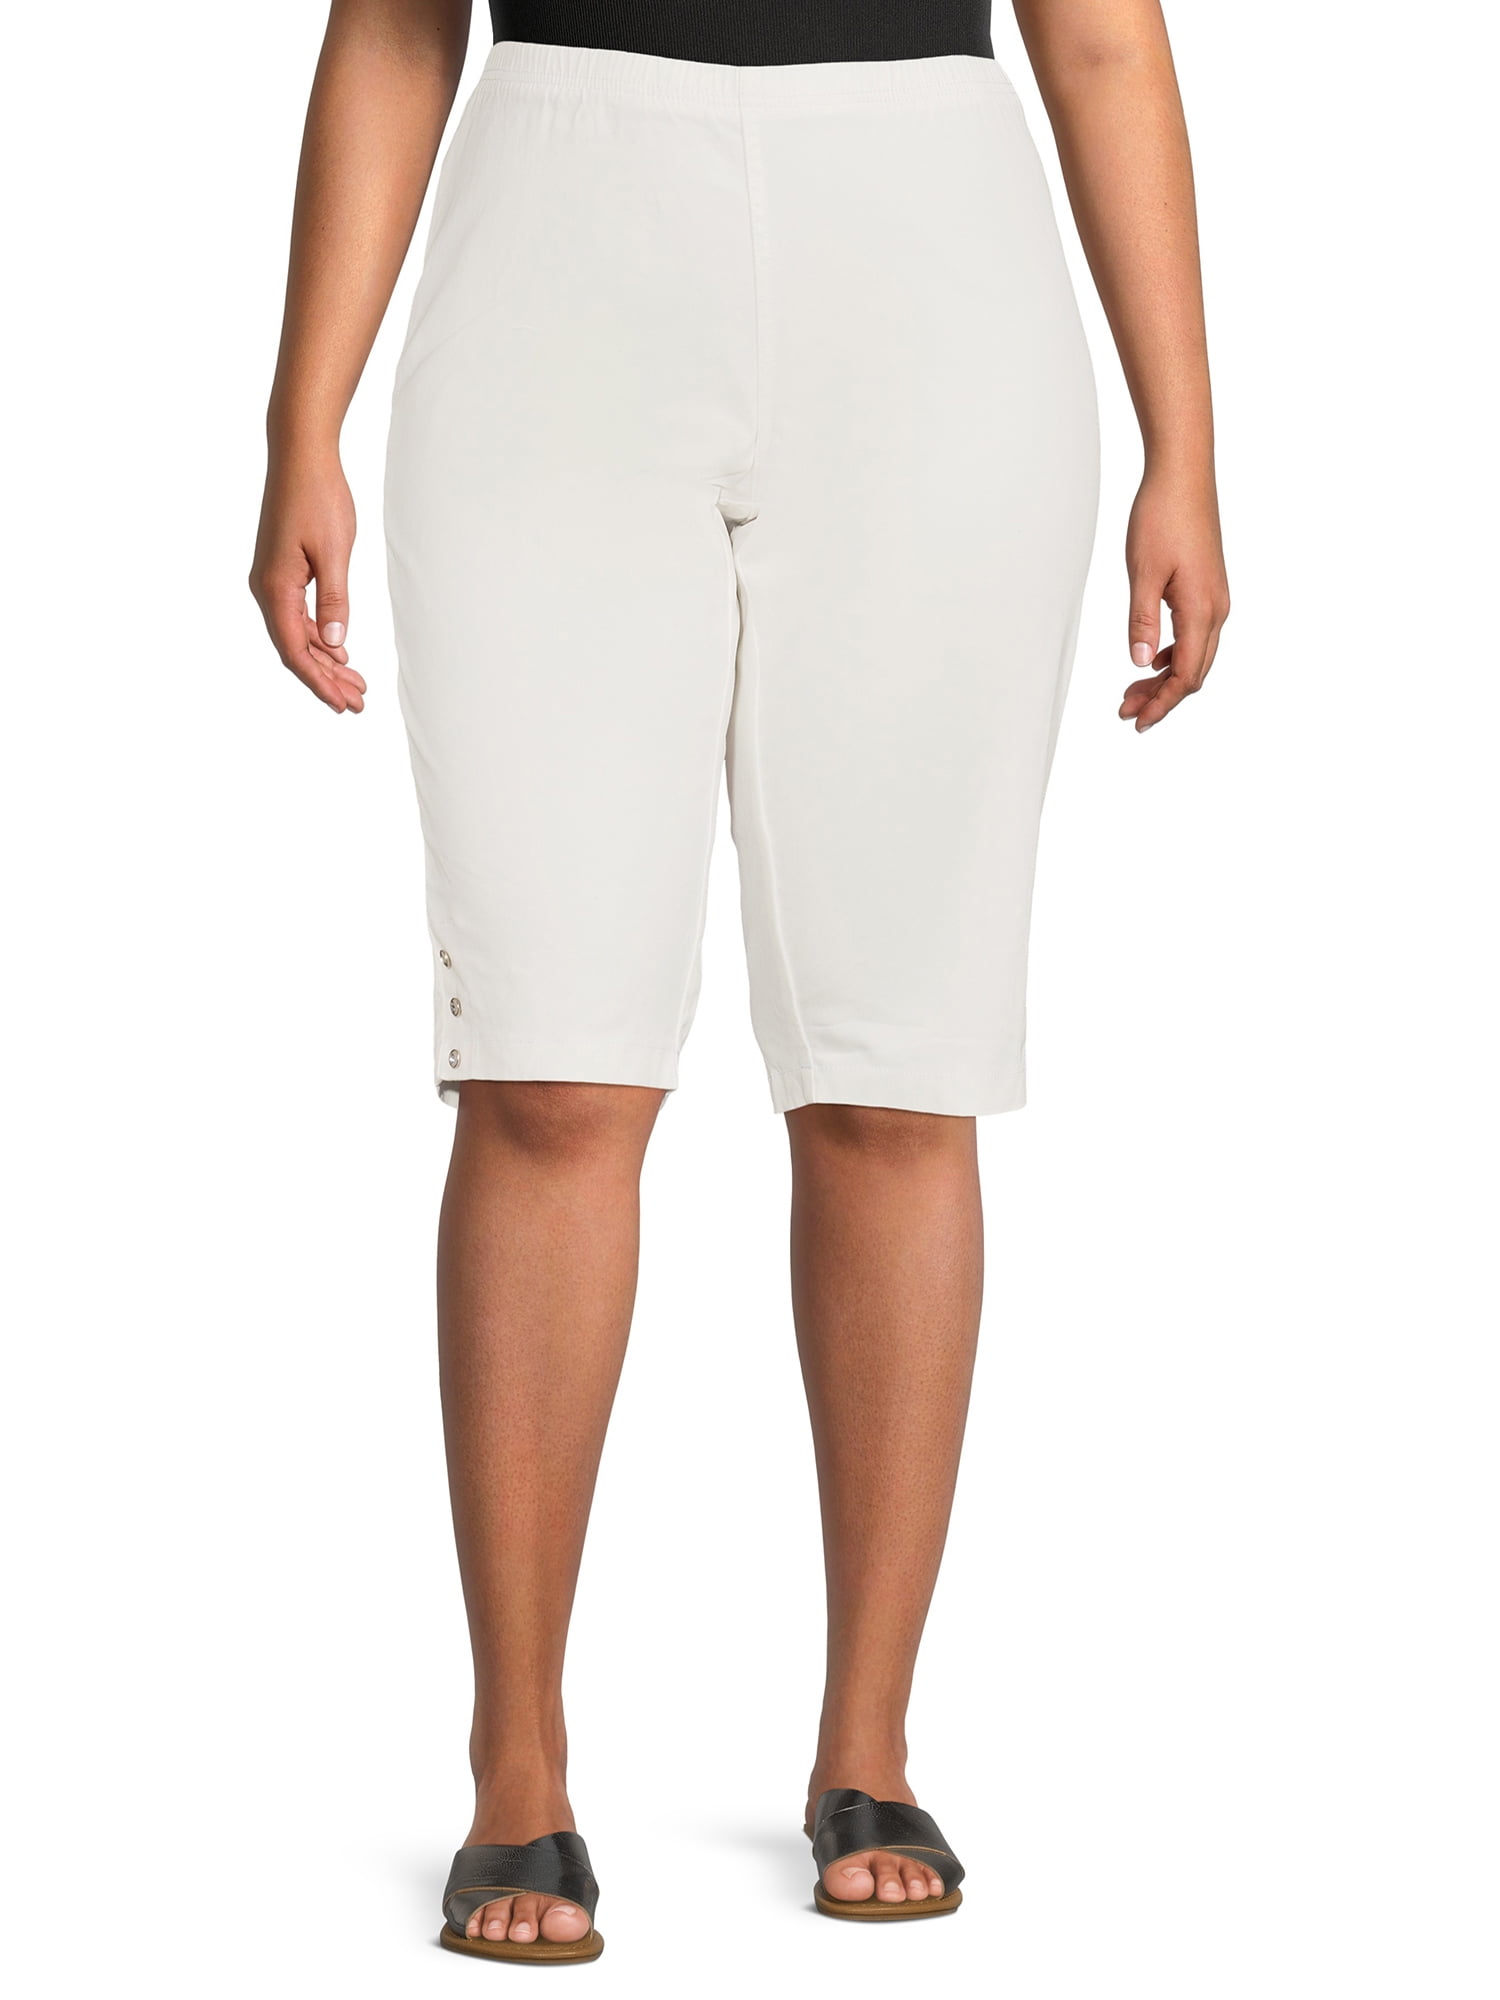 Just My Size Women's Plus Size Pull-On Bling Tab Capri Pants 